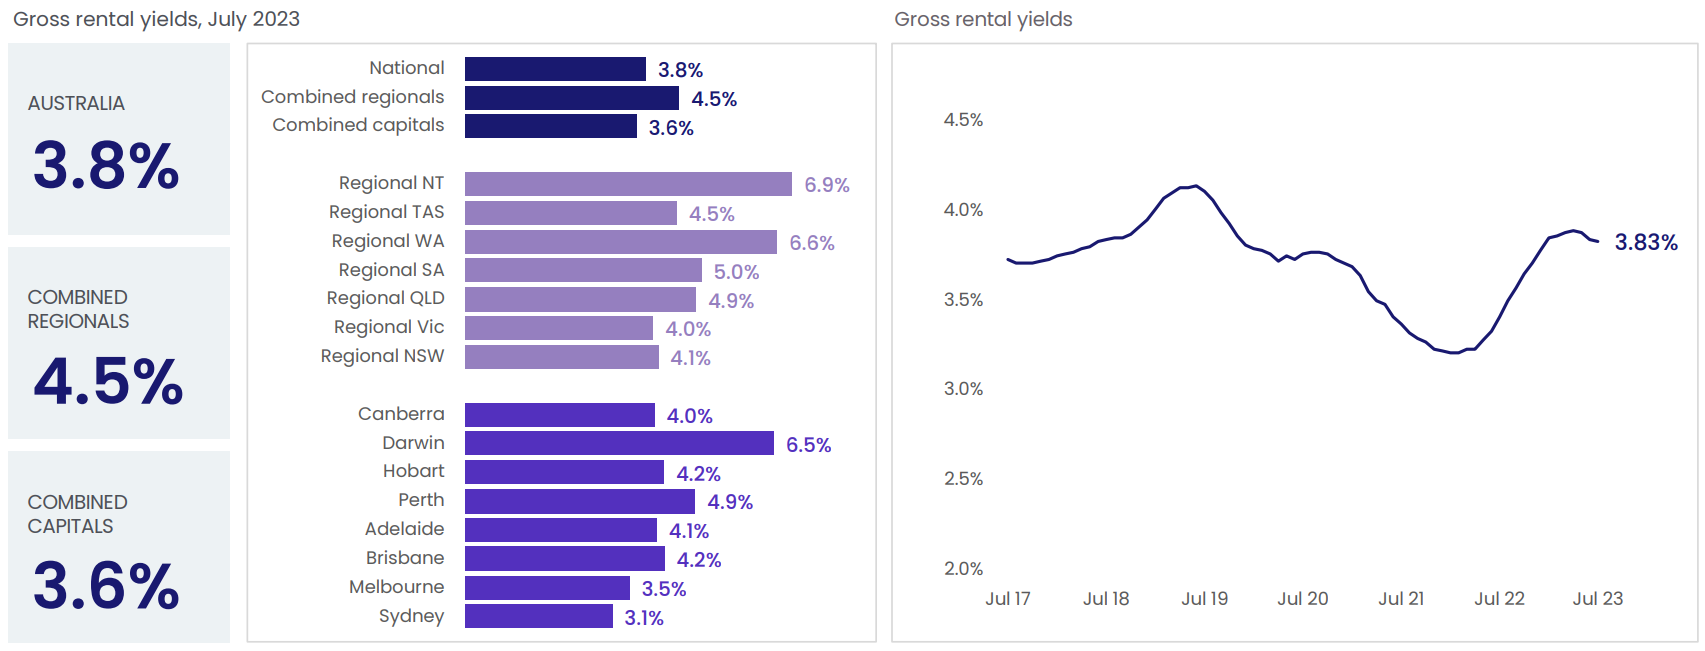 Graphs showing changes in Australian rental yields